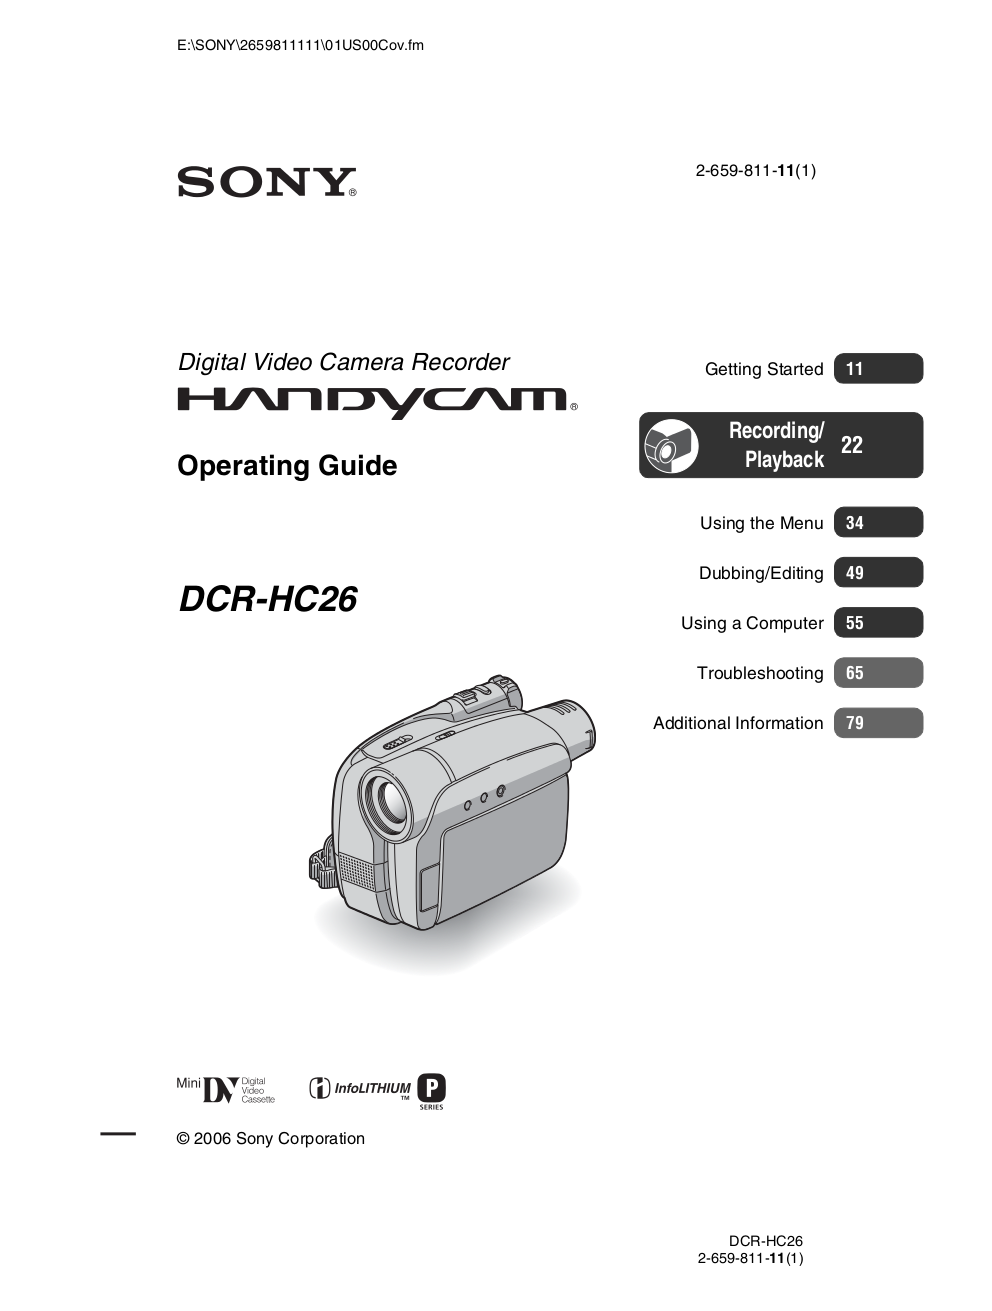 sony handycam download